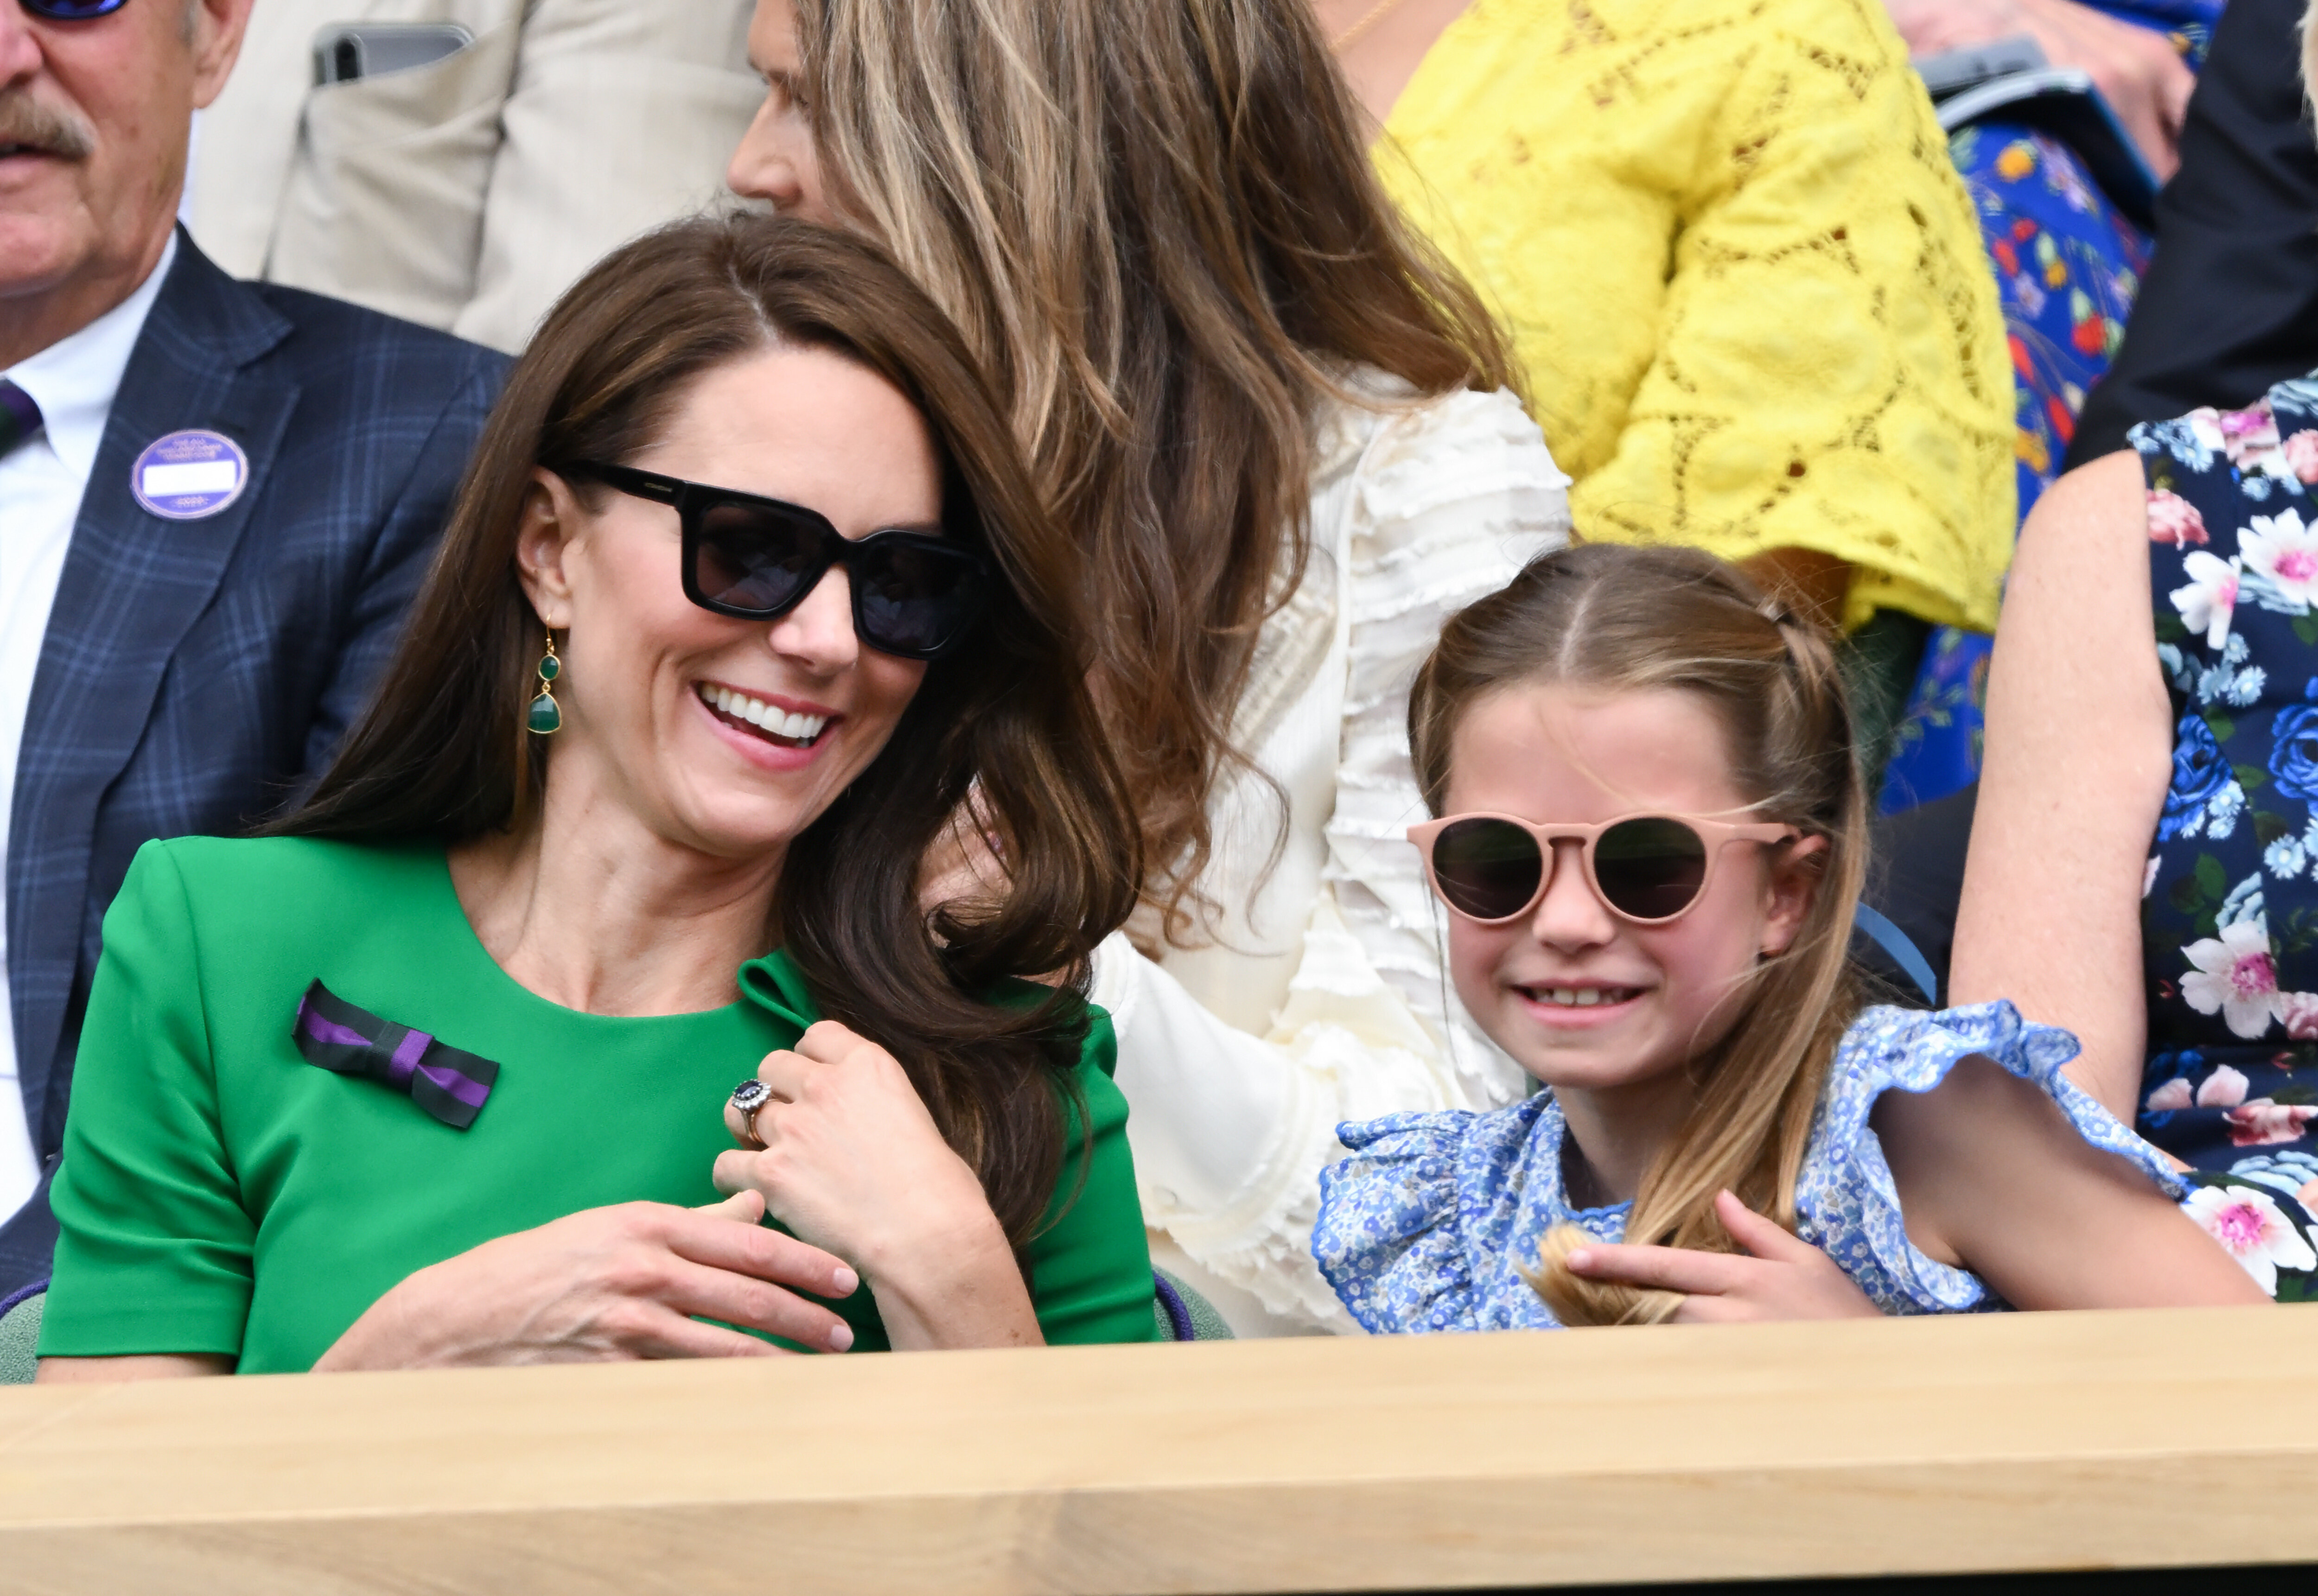 Kensington Palace Clarifies Kate Middleton's Return To Work Timeline